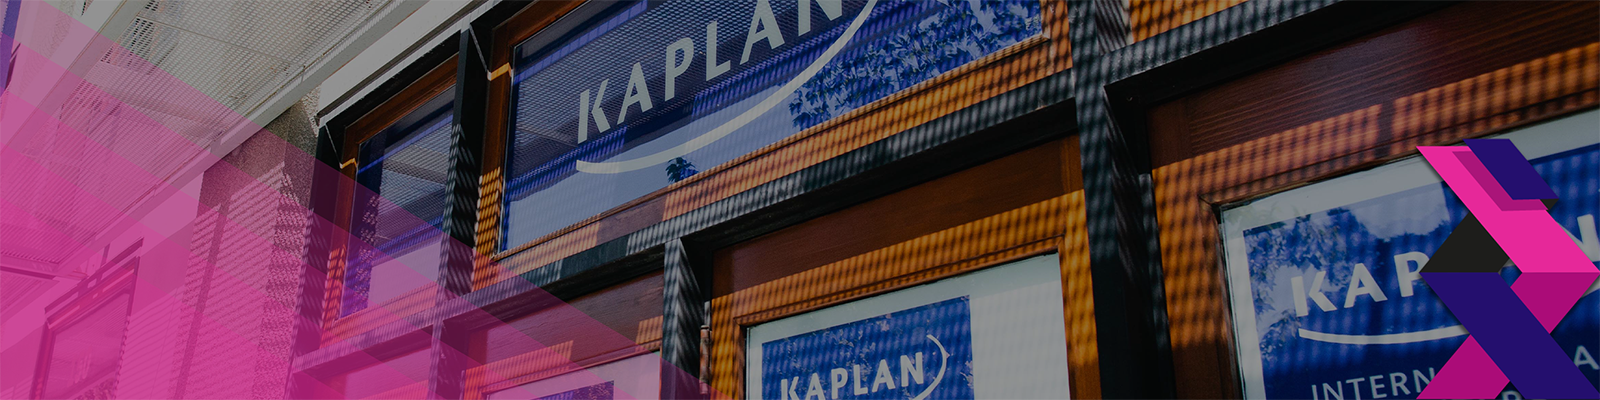 Kaplan International Languages - Oxford görseli